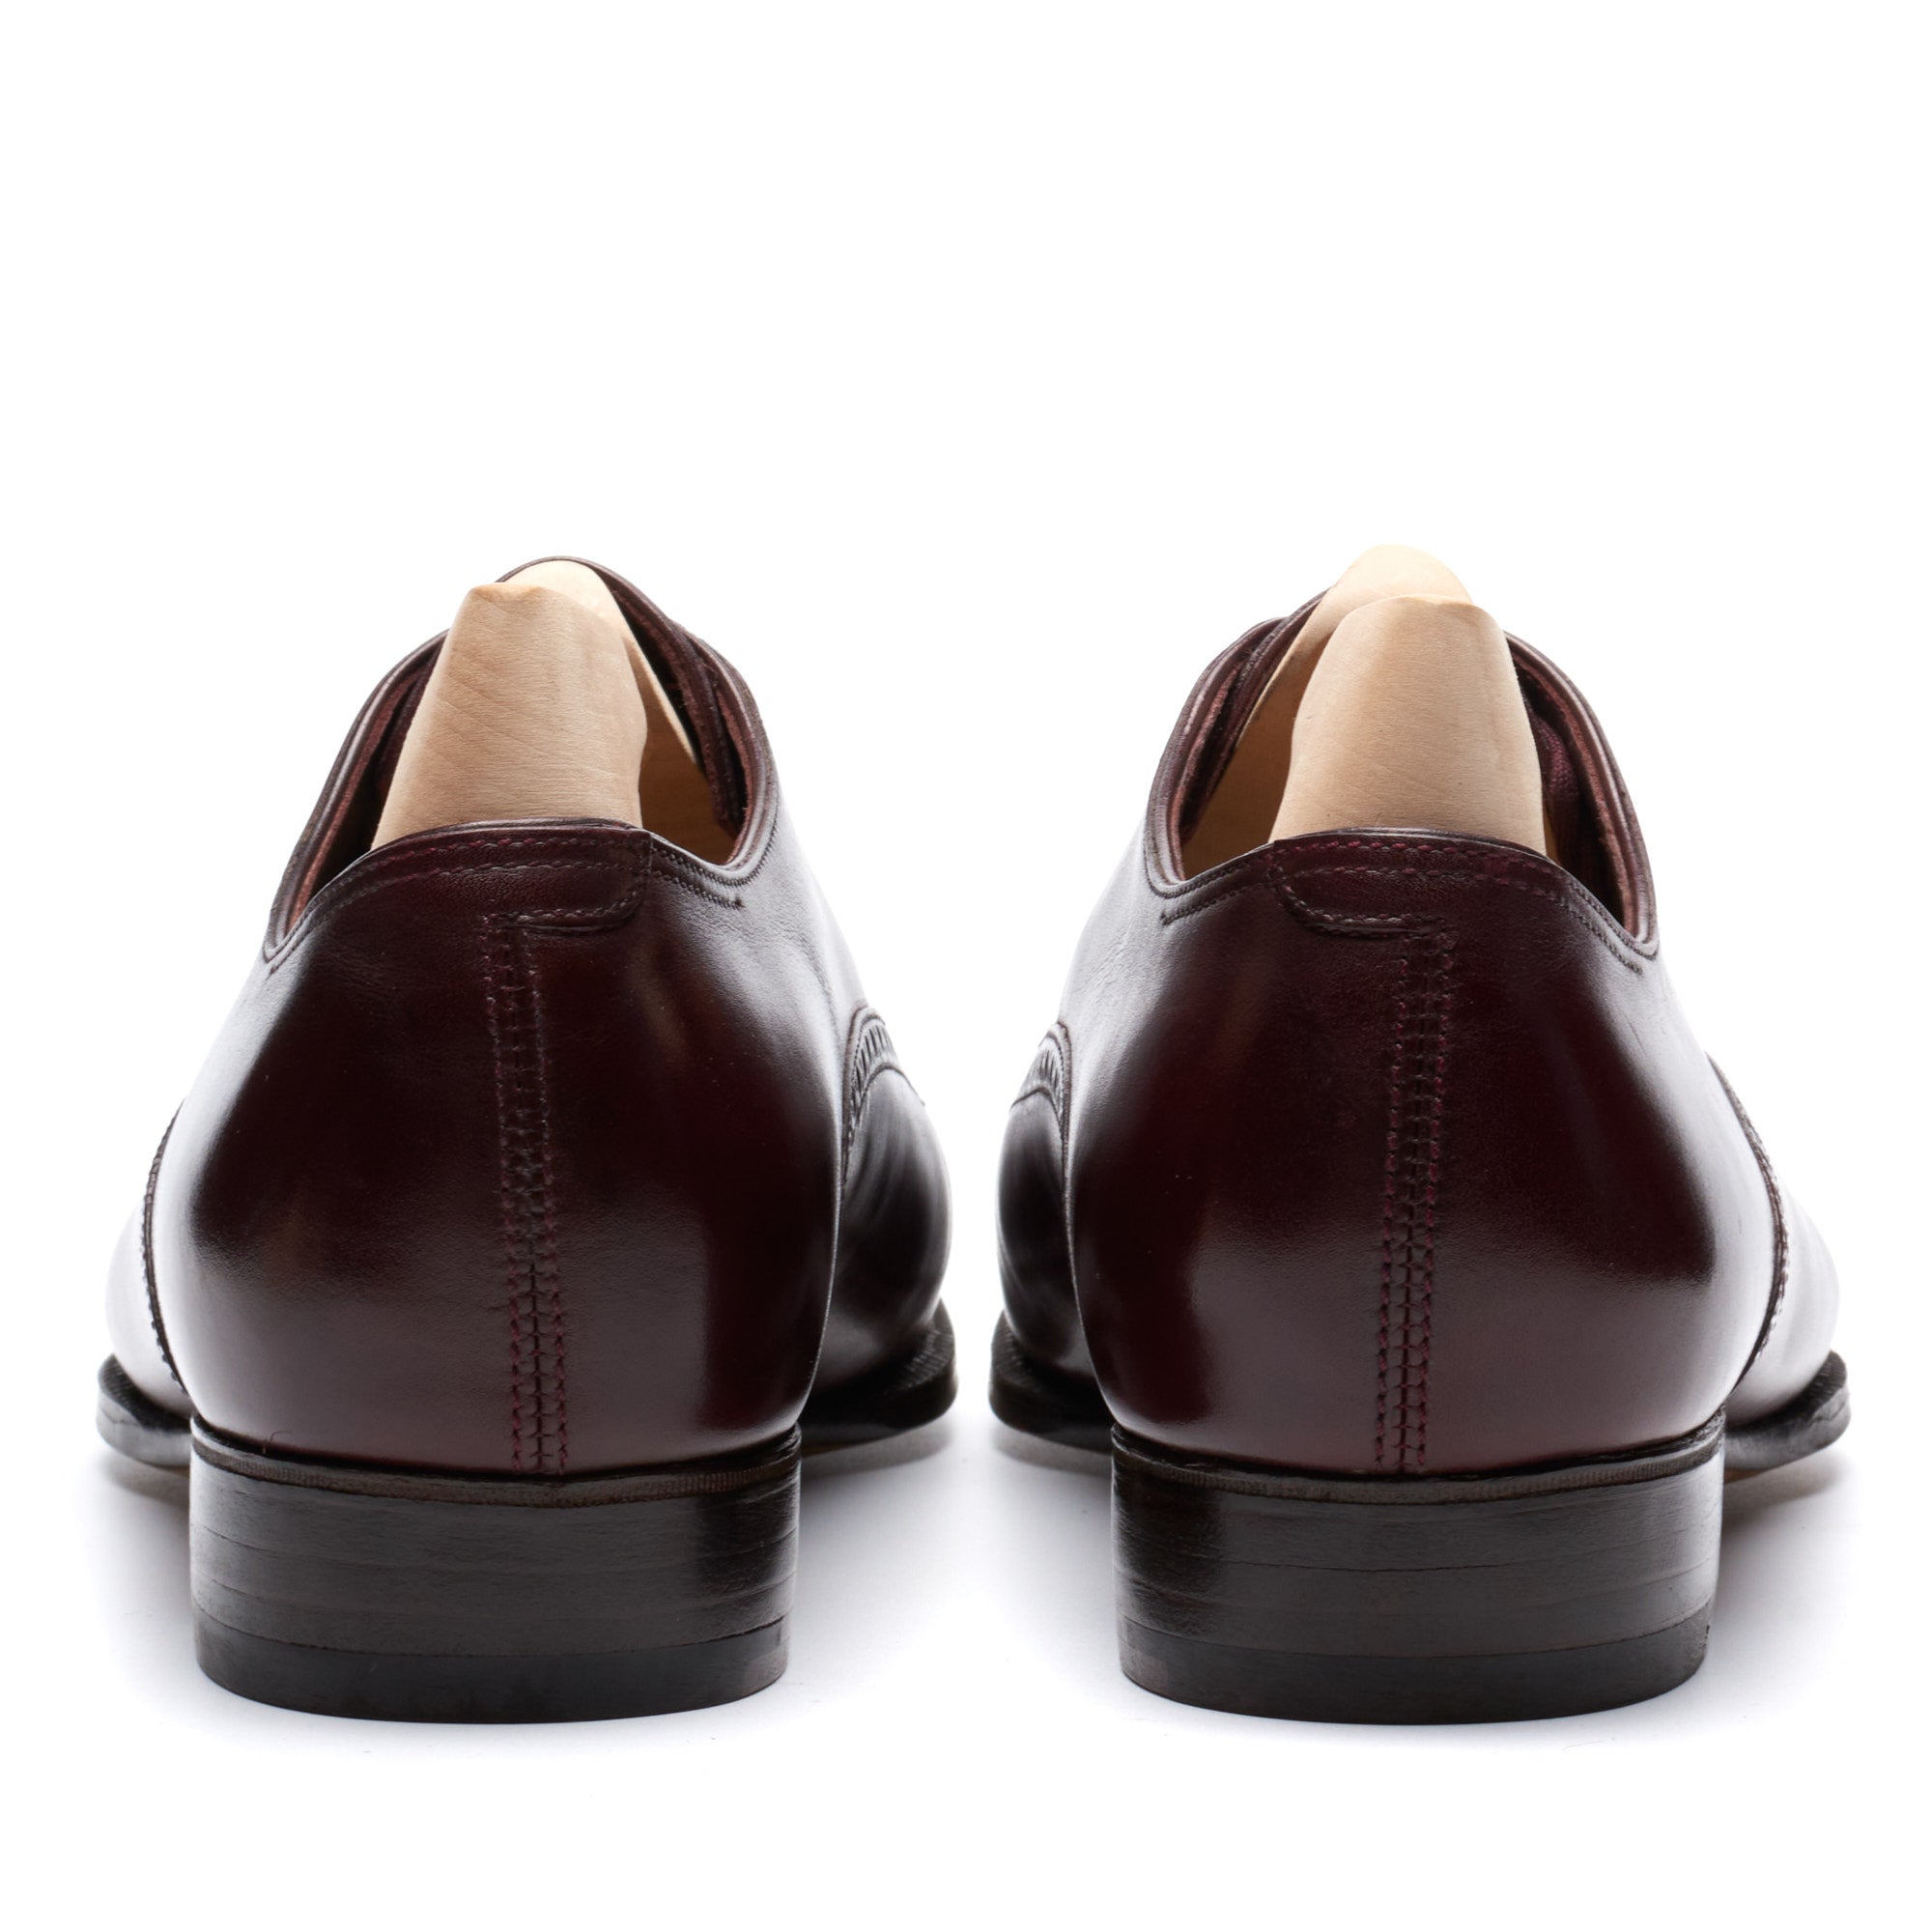 JOHN LOBB Paris Bespoke Dark Cherry Leather Oxford Shoes 7.5D US 8.5 NEW JOHN LOBB